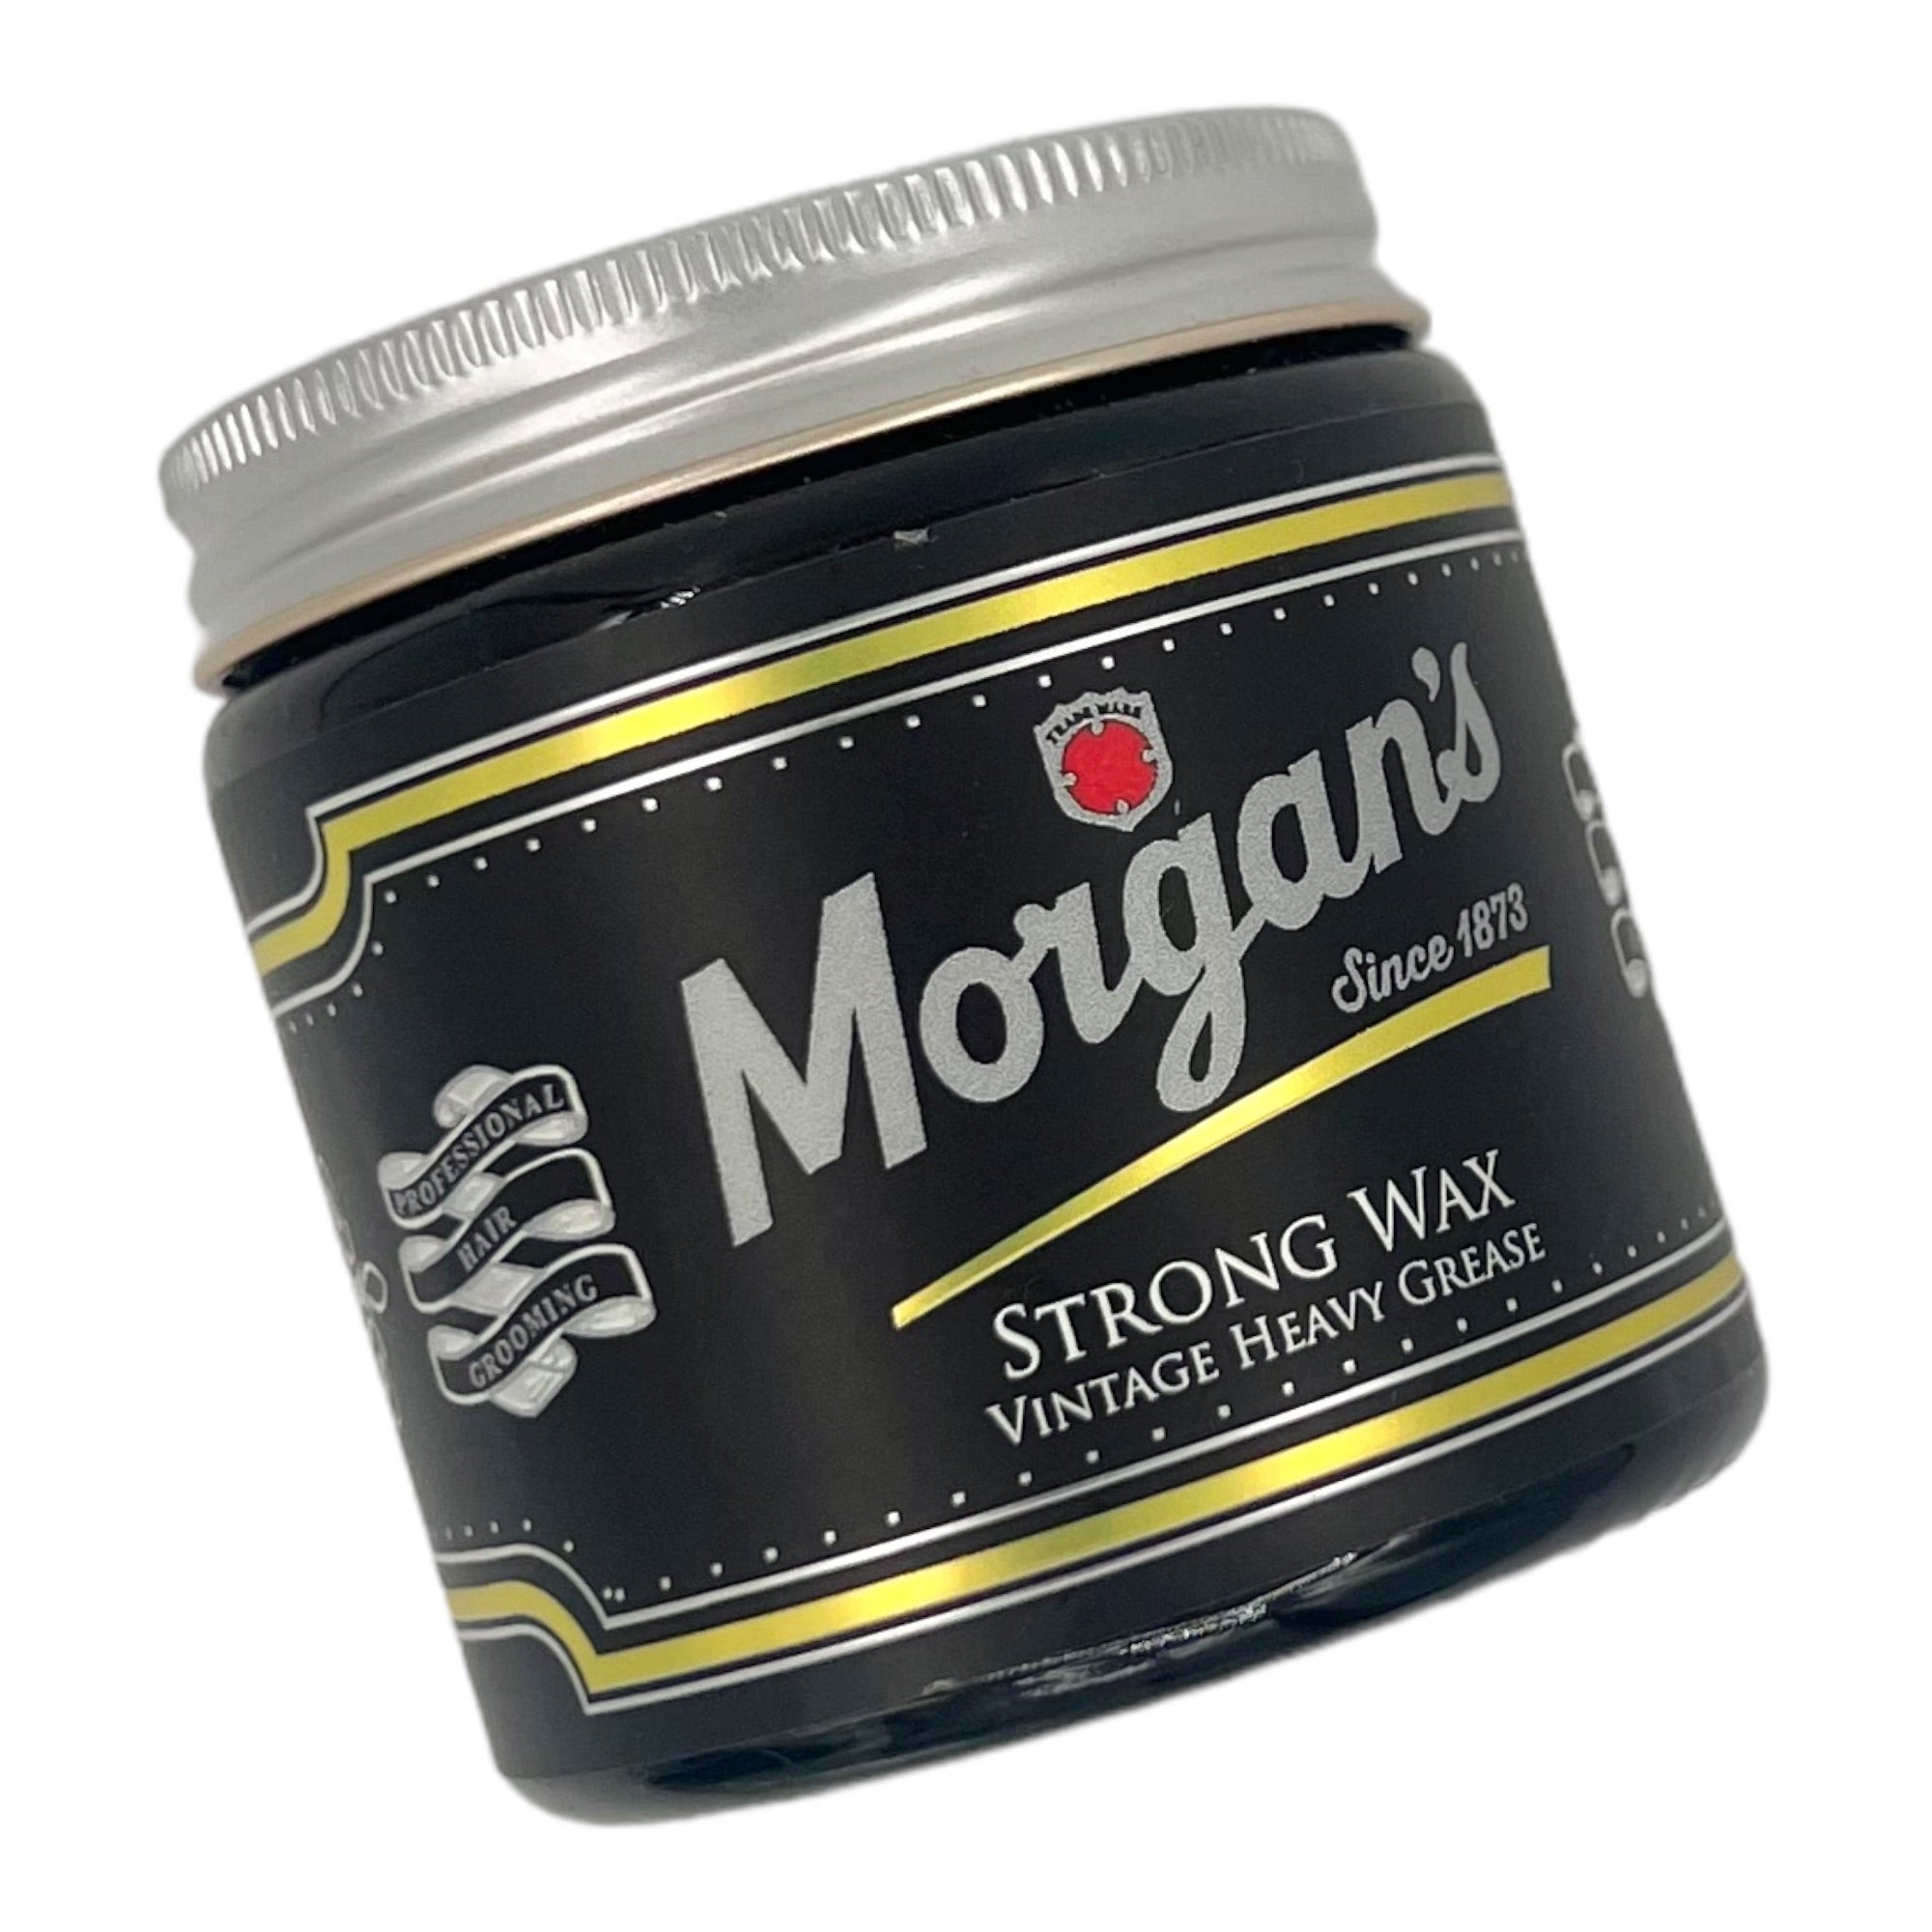 Morgan's - Strong Wax Vintage Heavy Grease 120ml